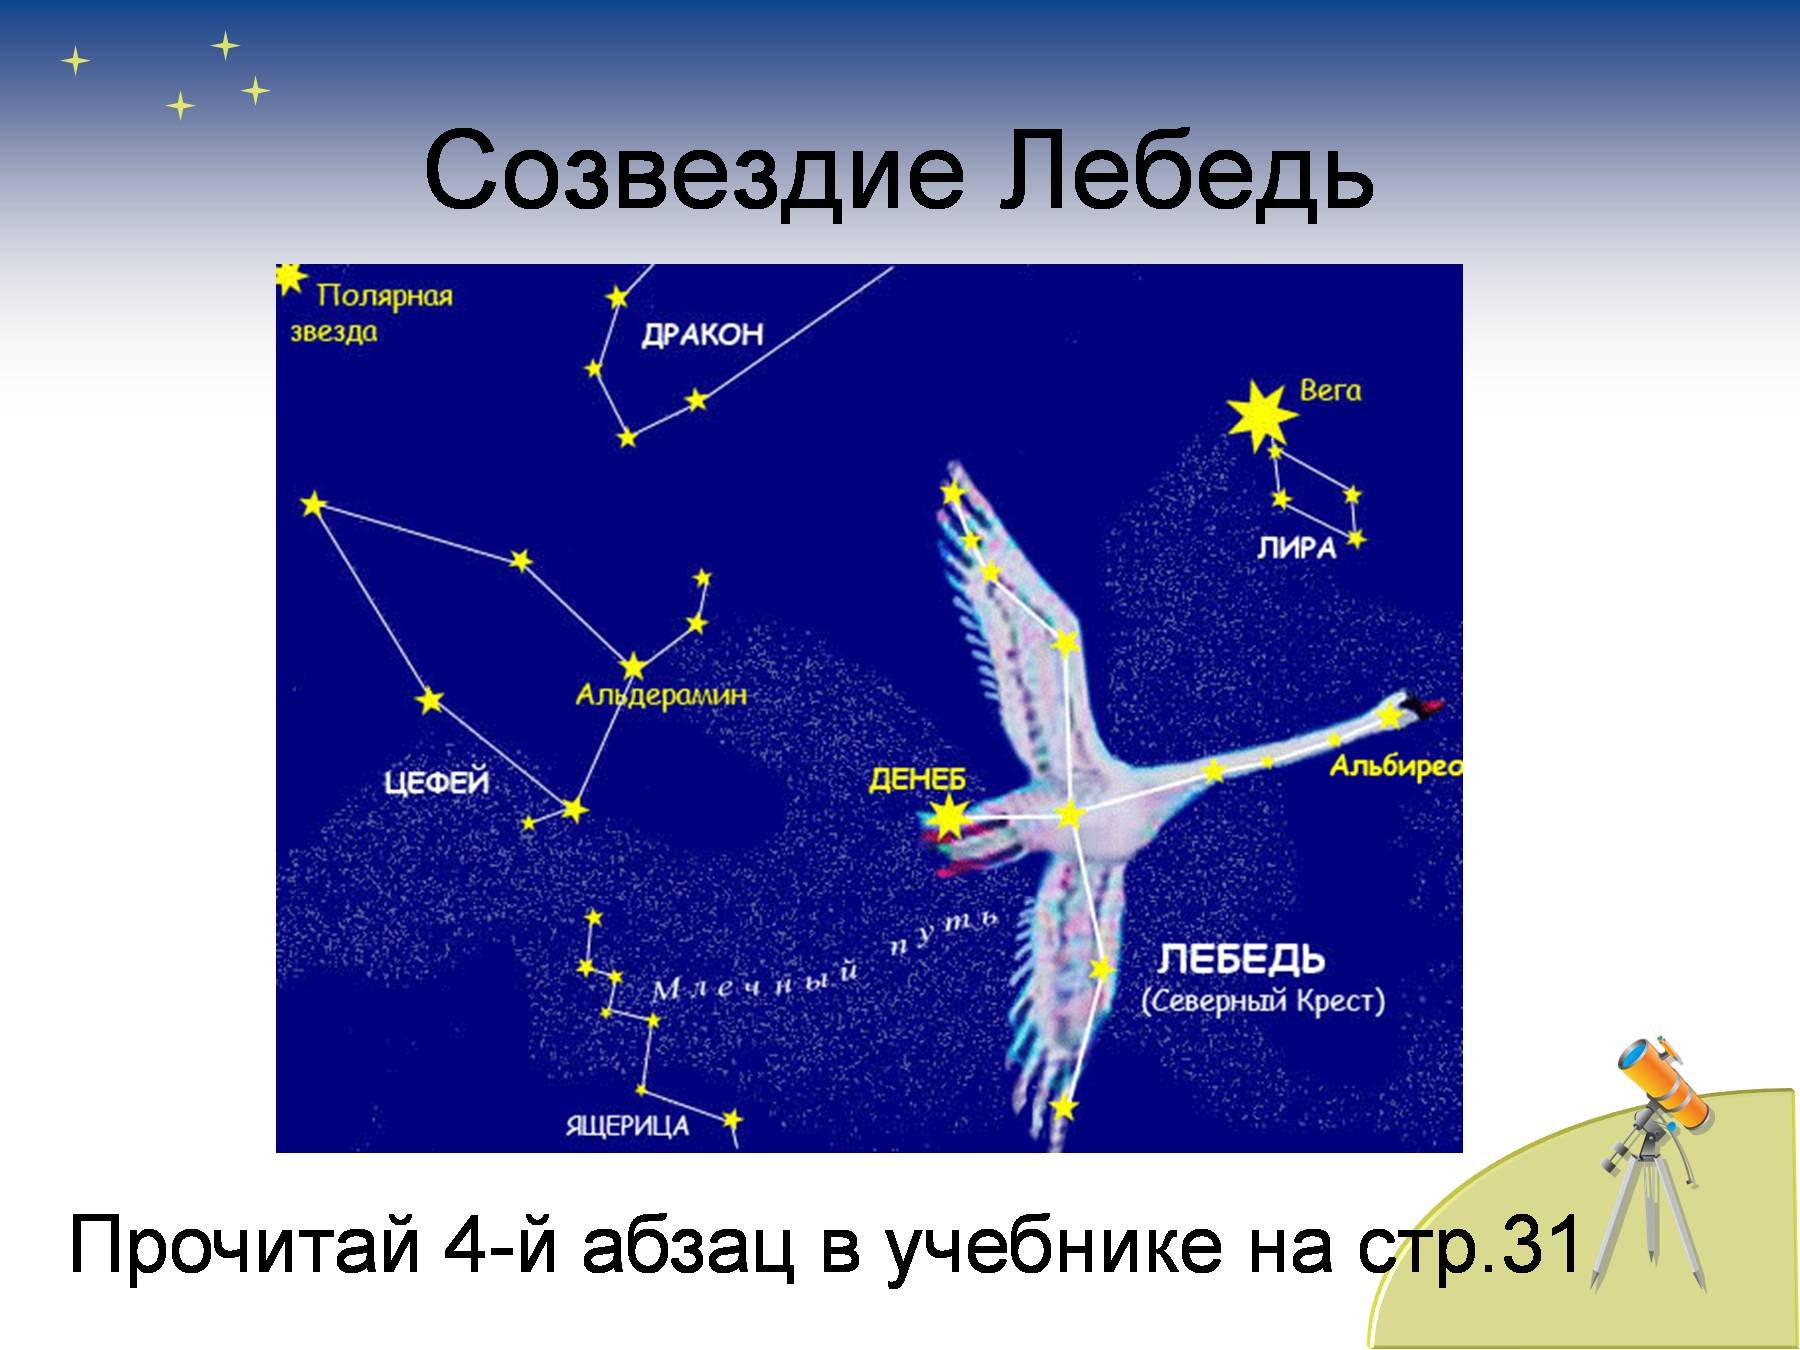 Презентация звездное небо весной 2 класс перспектива. Созвездие лебедь Денеб. Созвездие лебедя и Полярная звезда. Созвездие лебедь окружающий мир 2 класс. Созвездие лебедь Денеб схема.